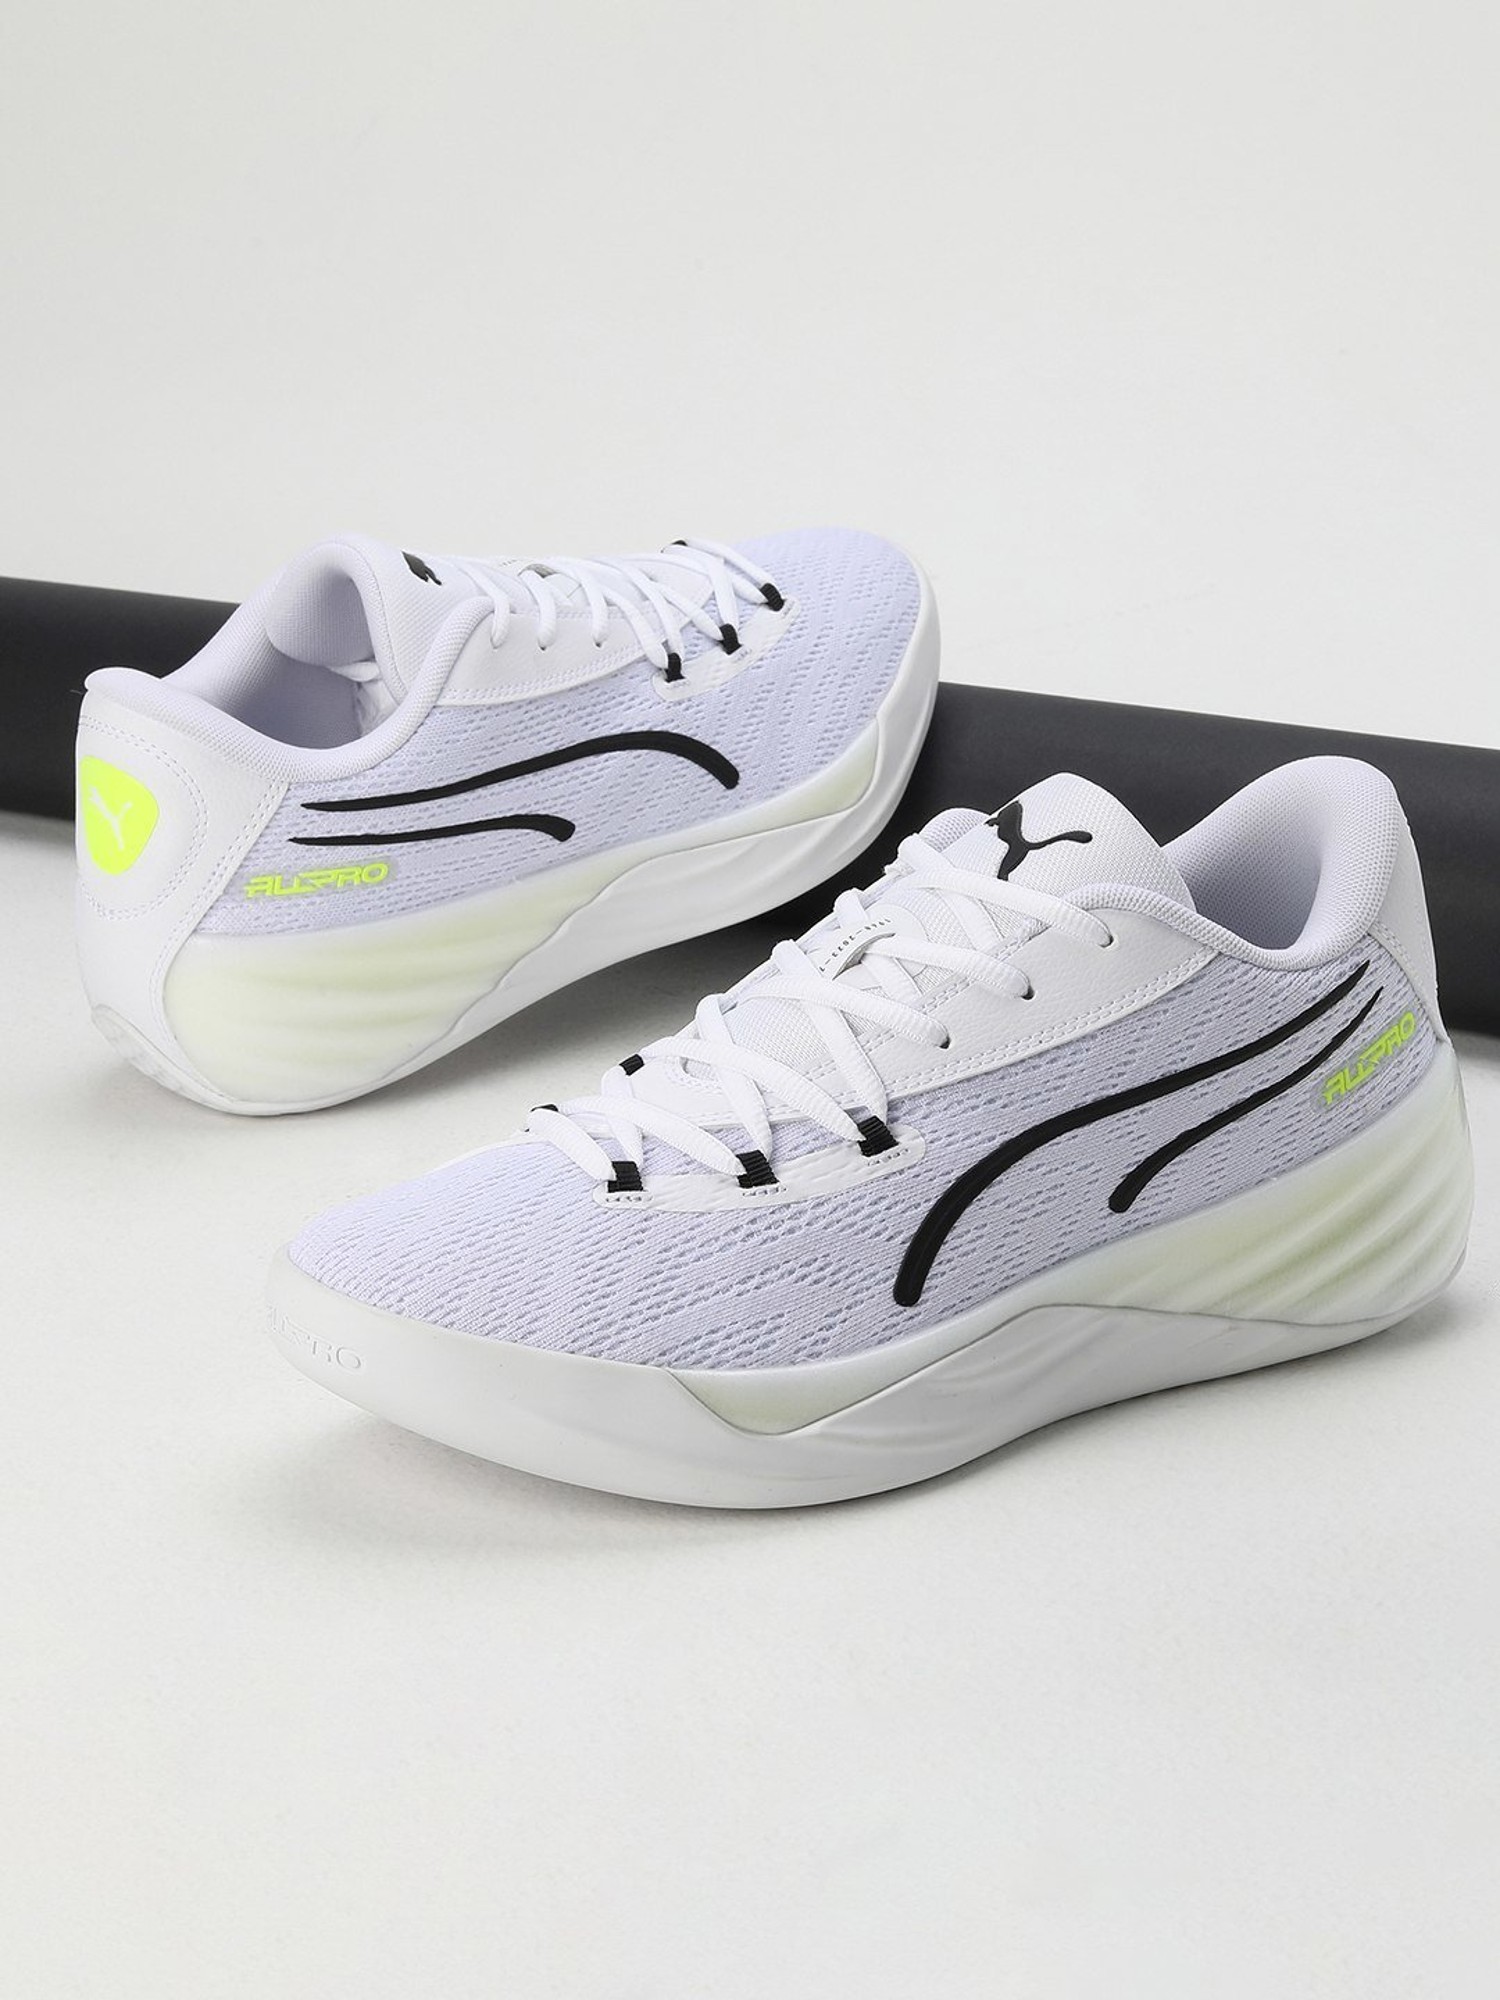 Buy Puma Men's All Pro NITRO White Basketball Shoes for Men at